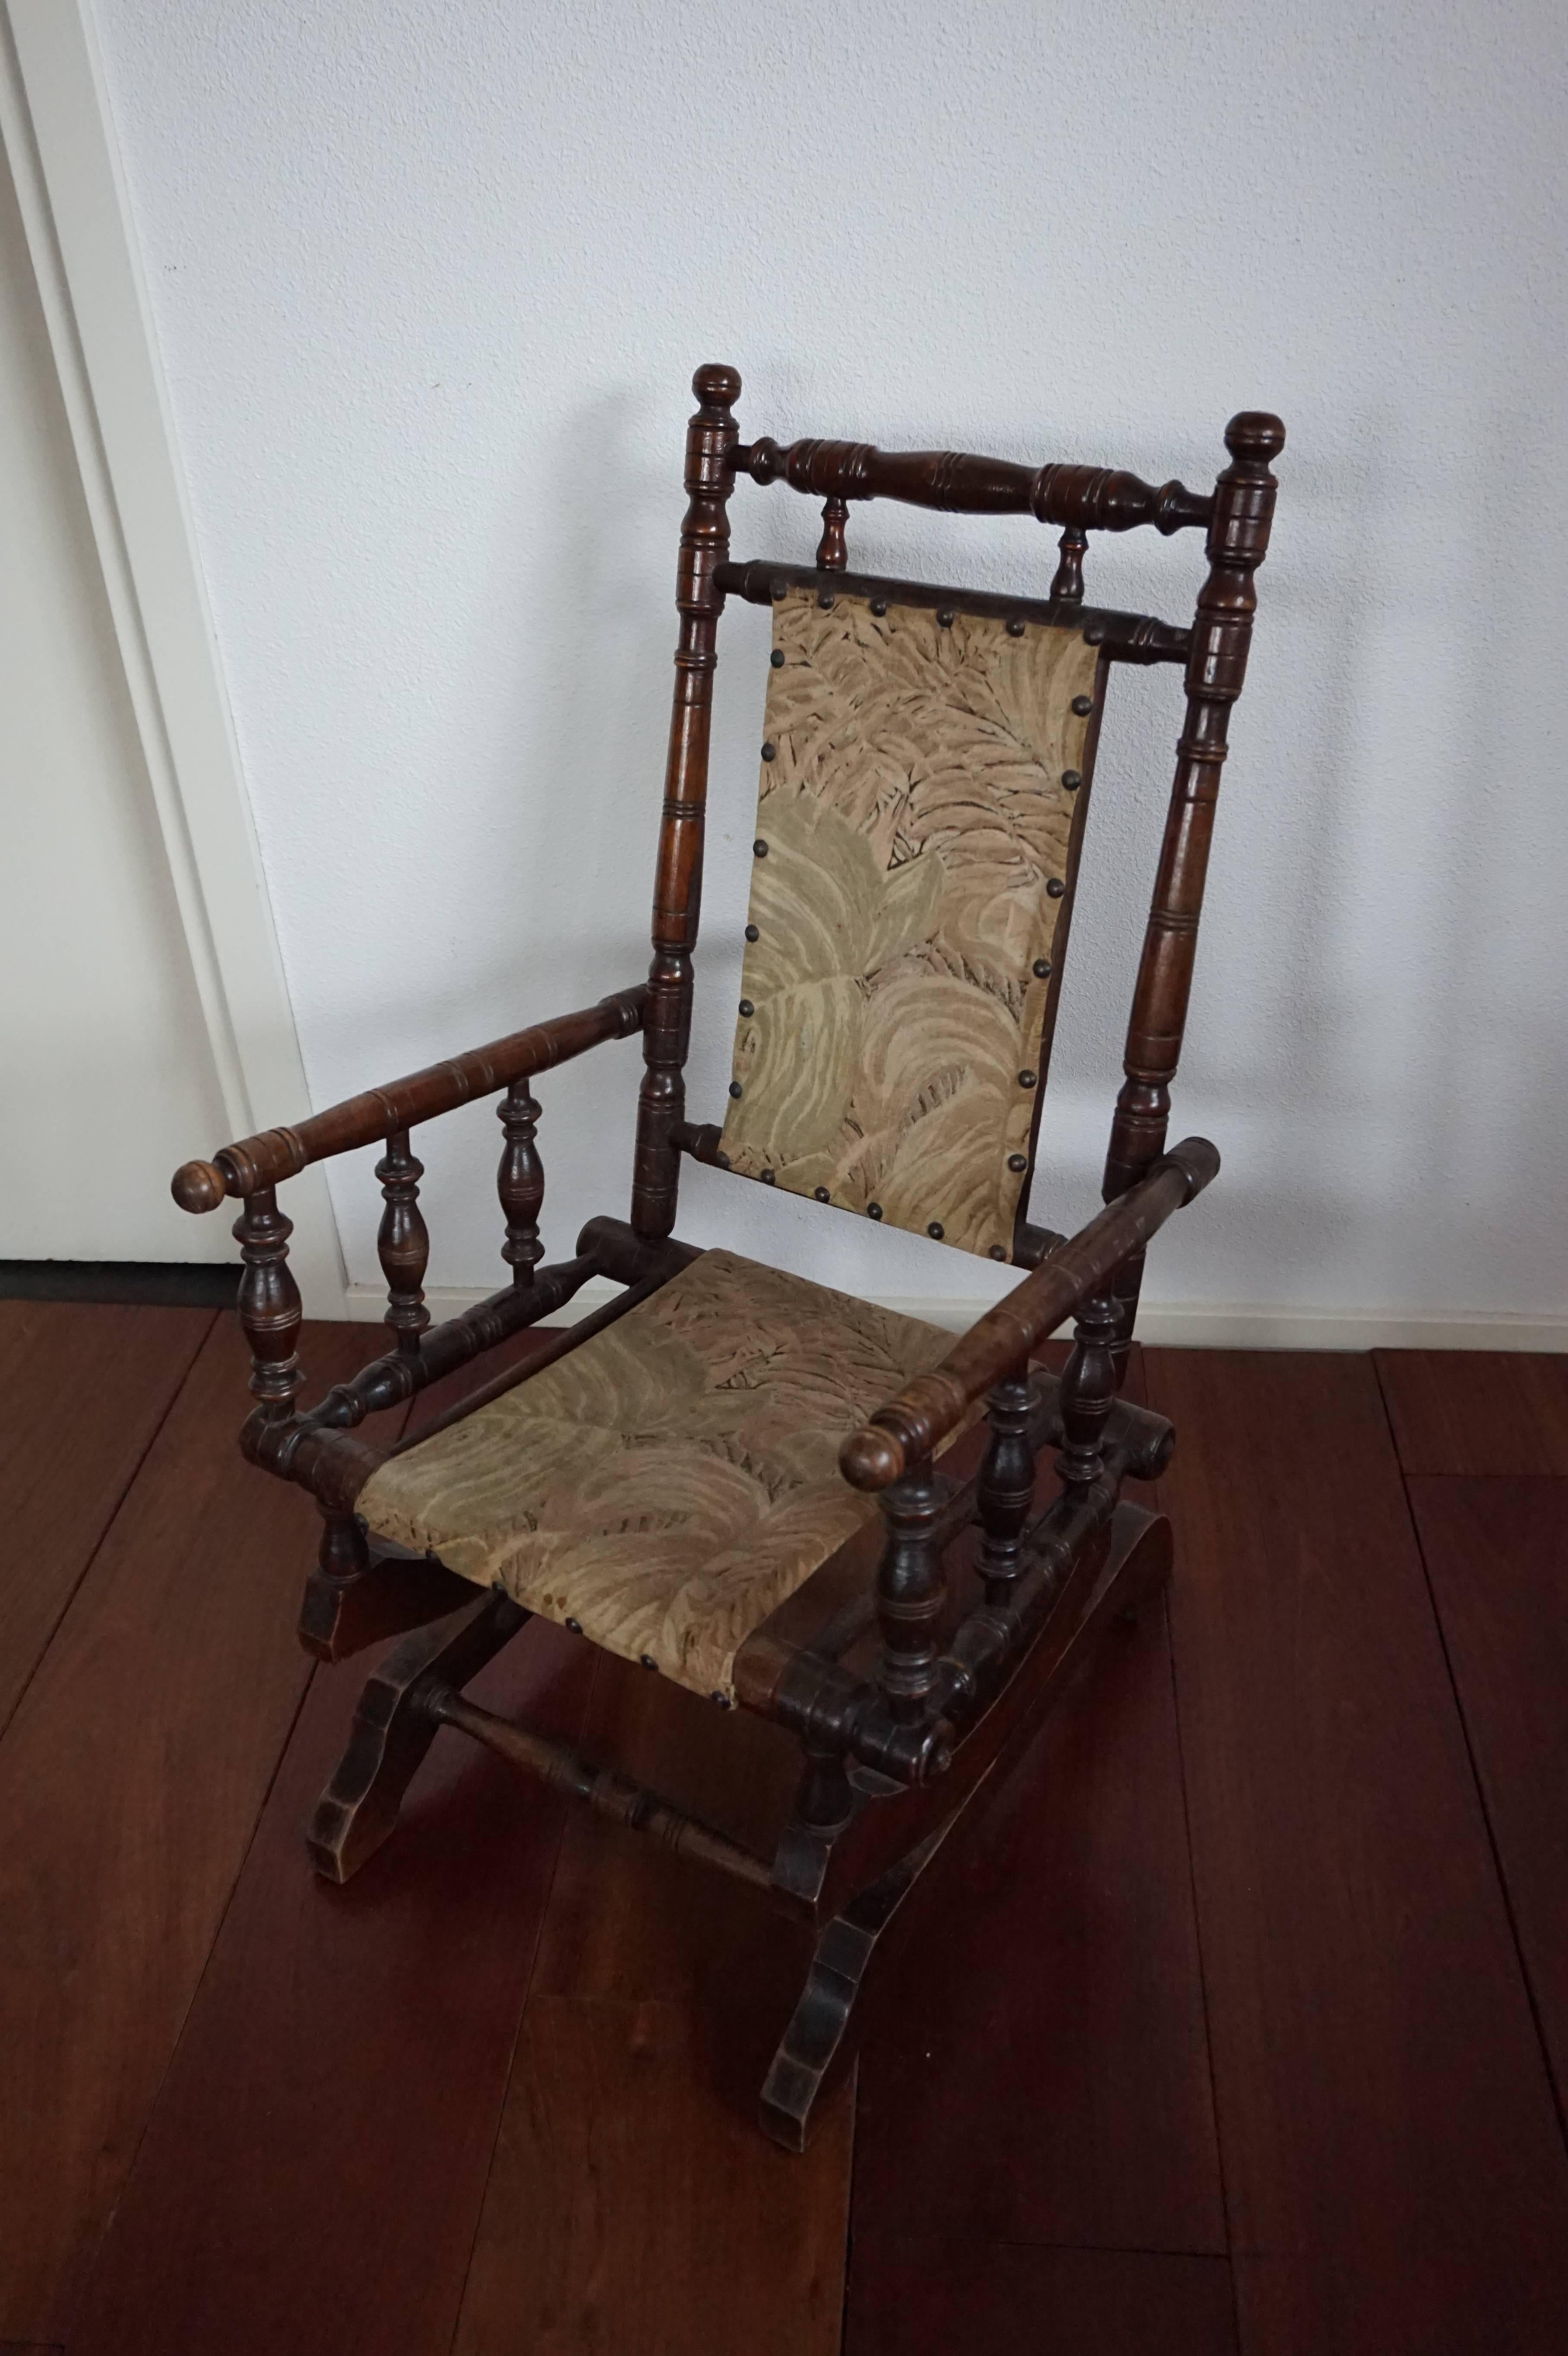 antique childs rocking chair